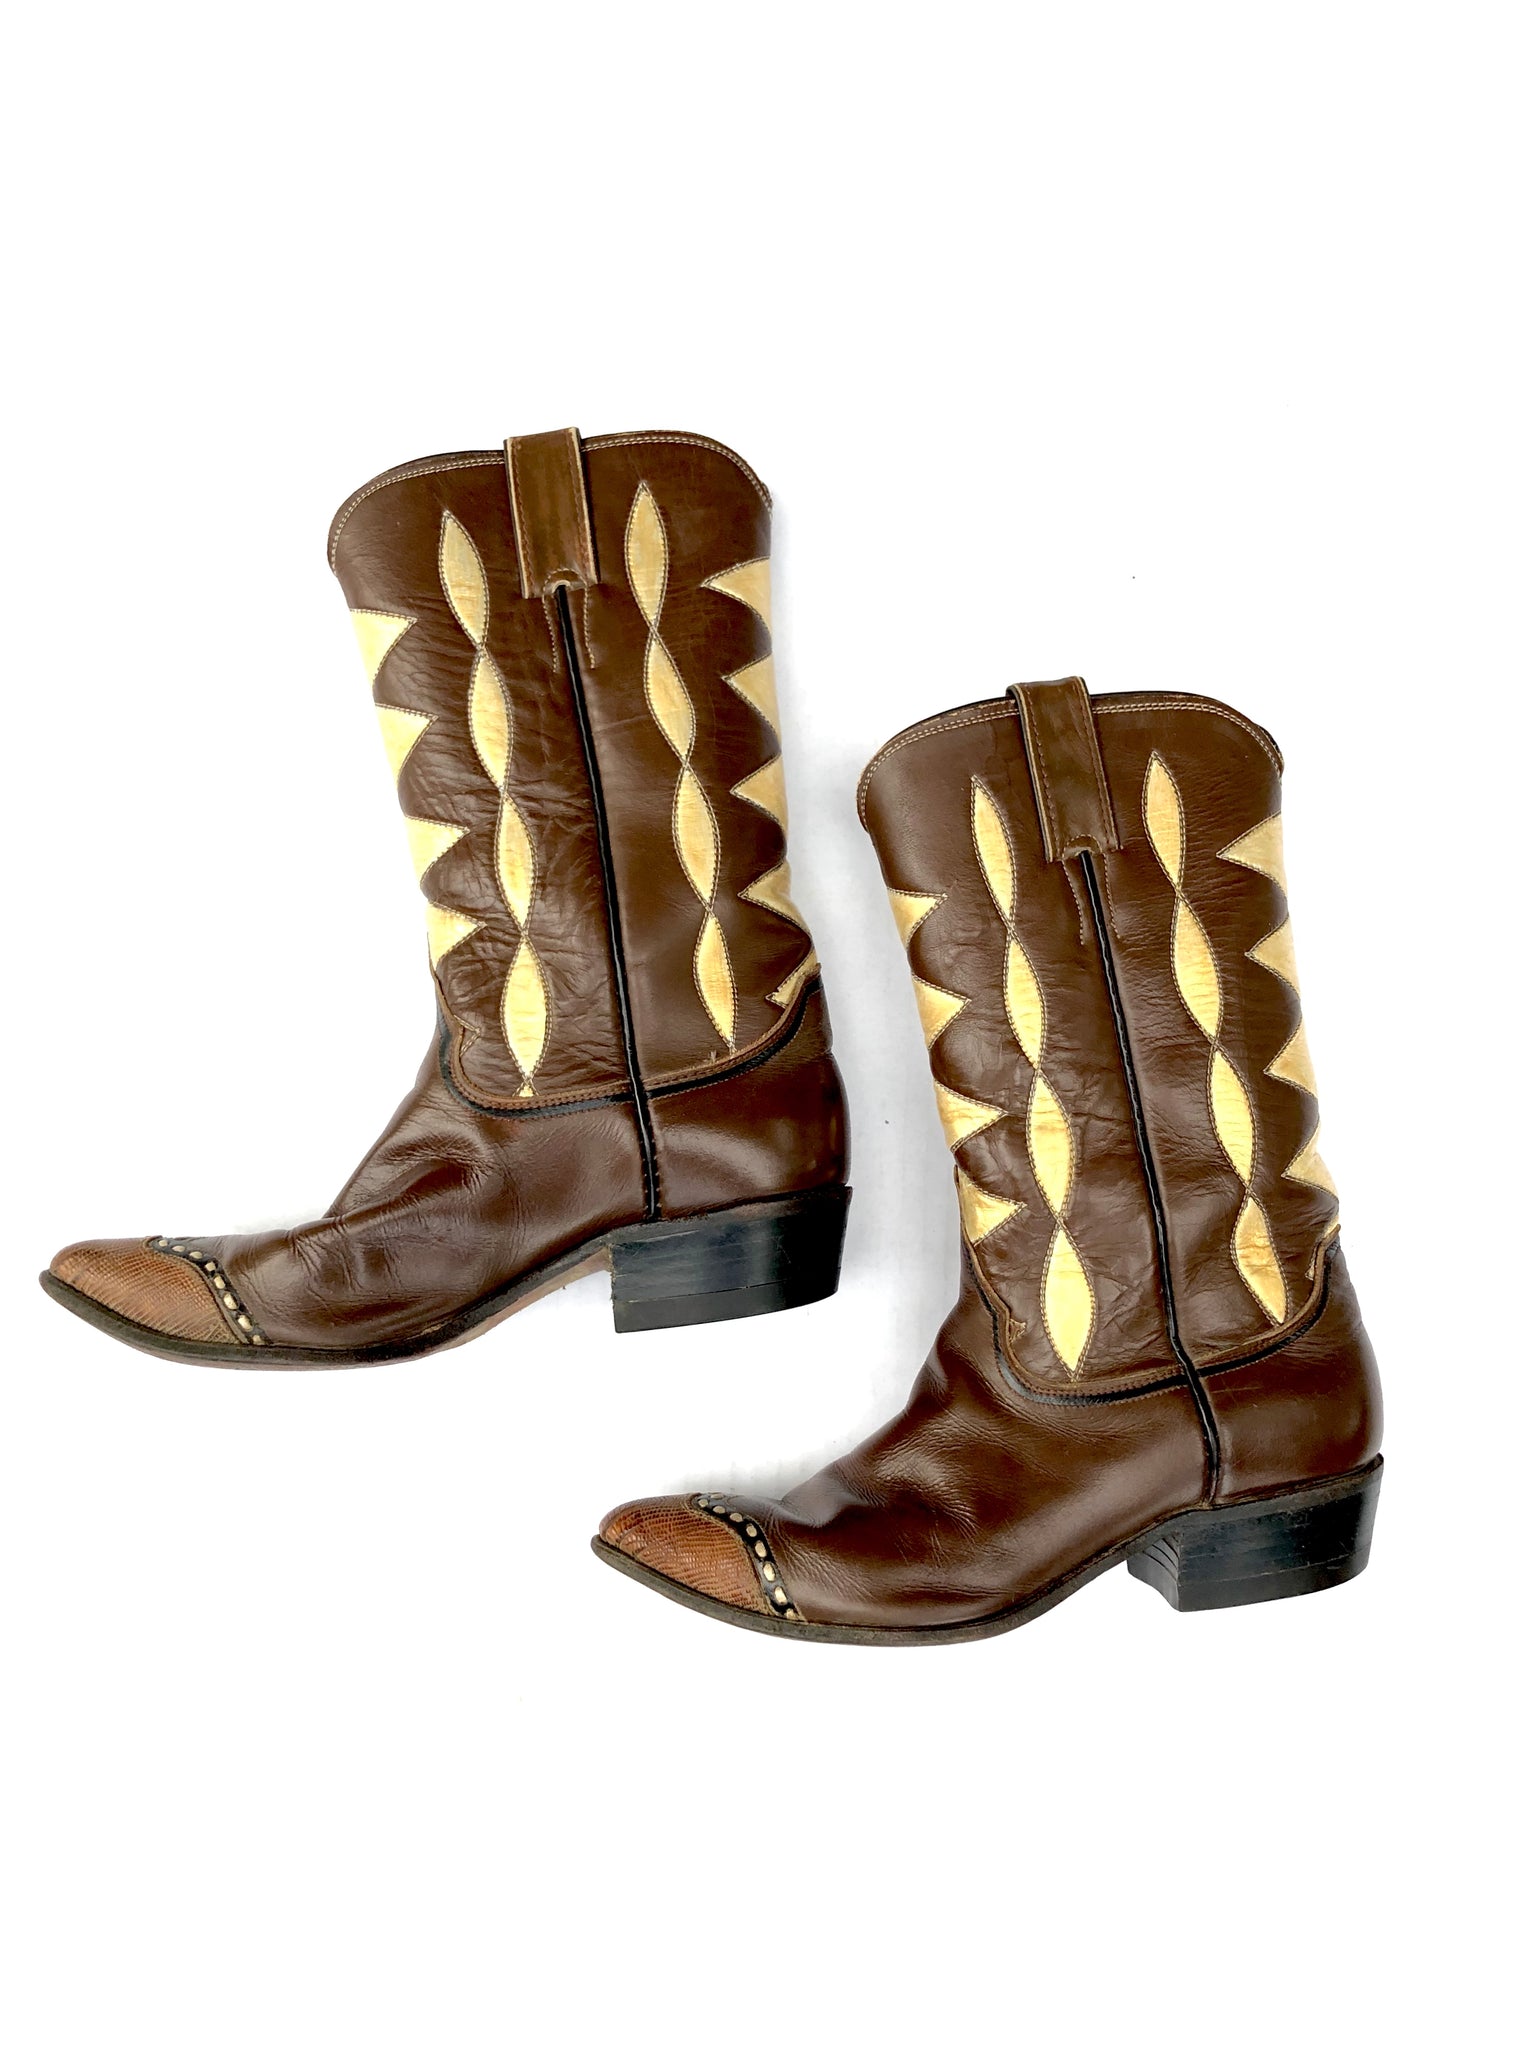 VINTAGE: 1960s Justin Cowboy Boots